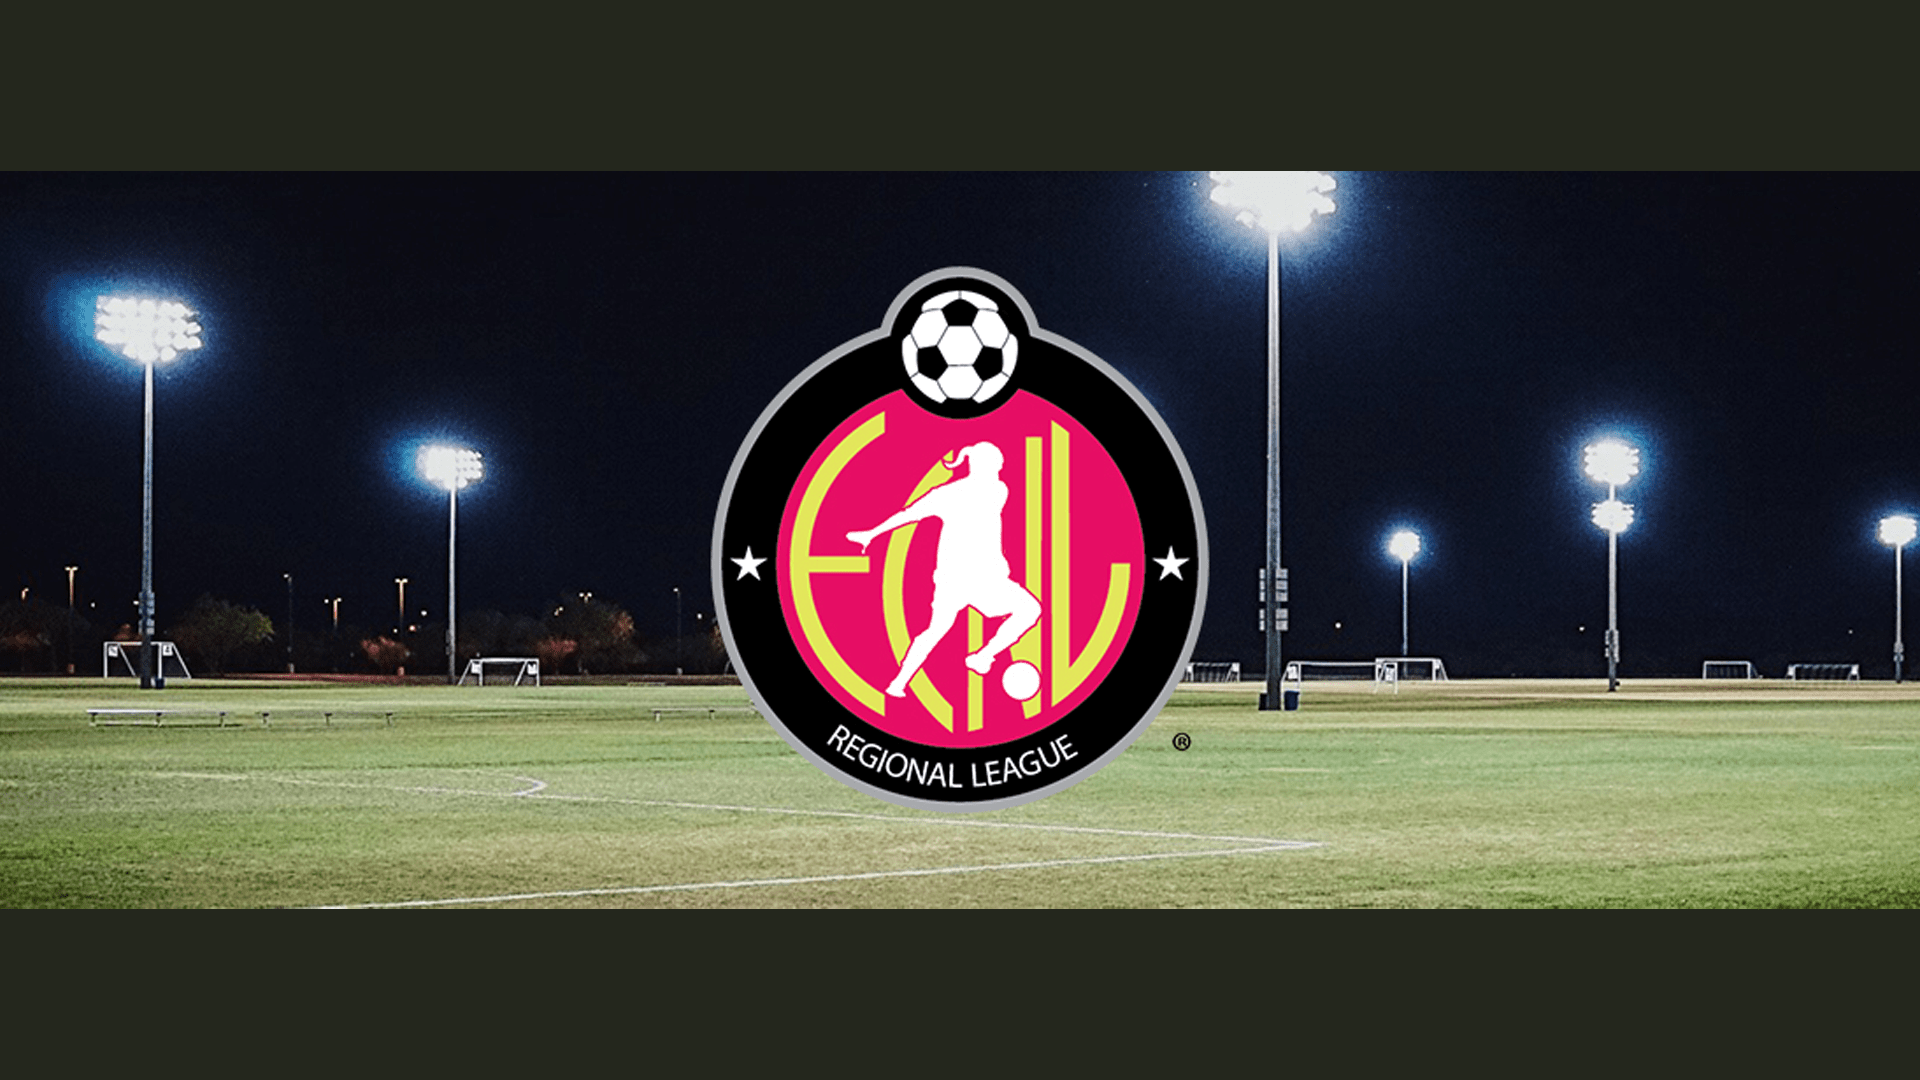 The ECNL Regional League "Raising the Game" Girls Soccer Network